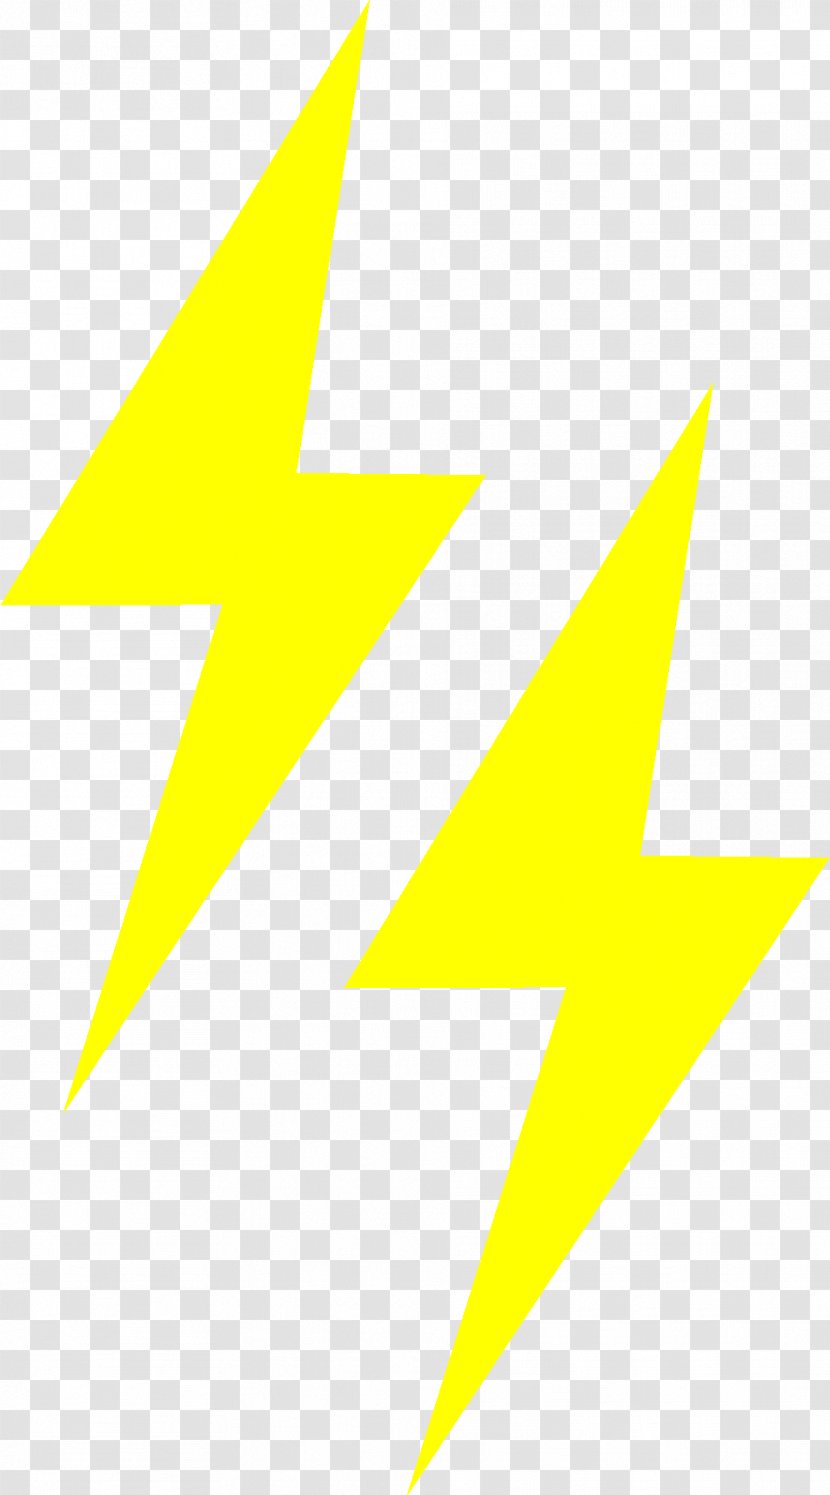 Lightning Rainbow Dash Cutie Mark Crusaders Thunder - My Little Pony Friendship Is Magic Transparent PNG